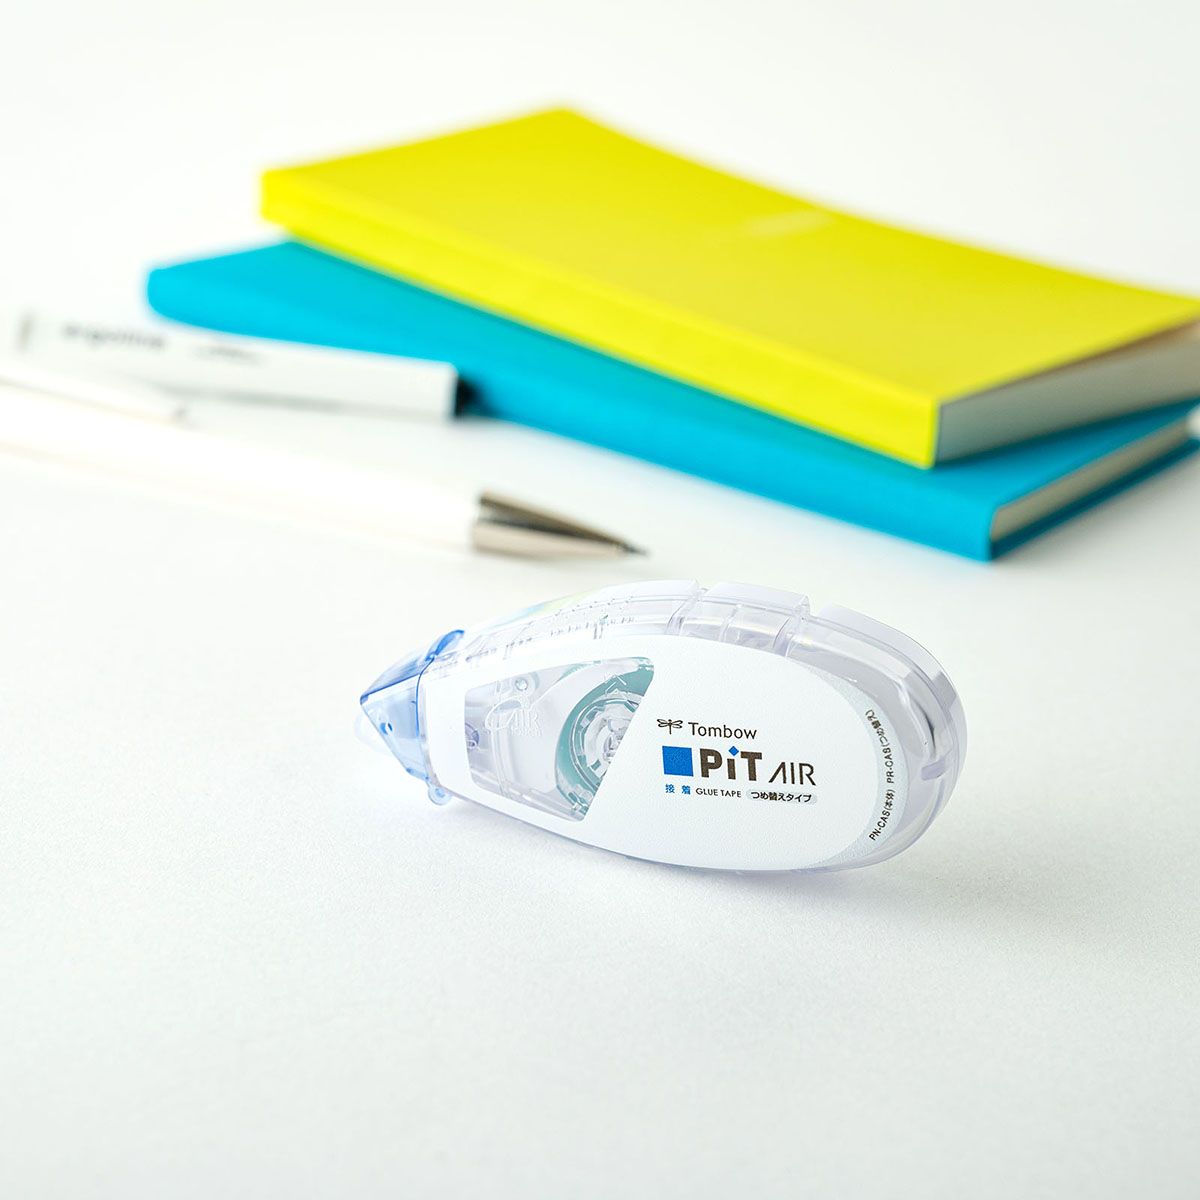 Tombow Pit Air Mini Glue Tape - Tokyo Pen Shop